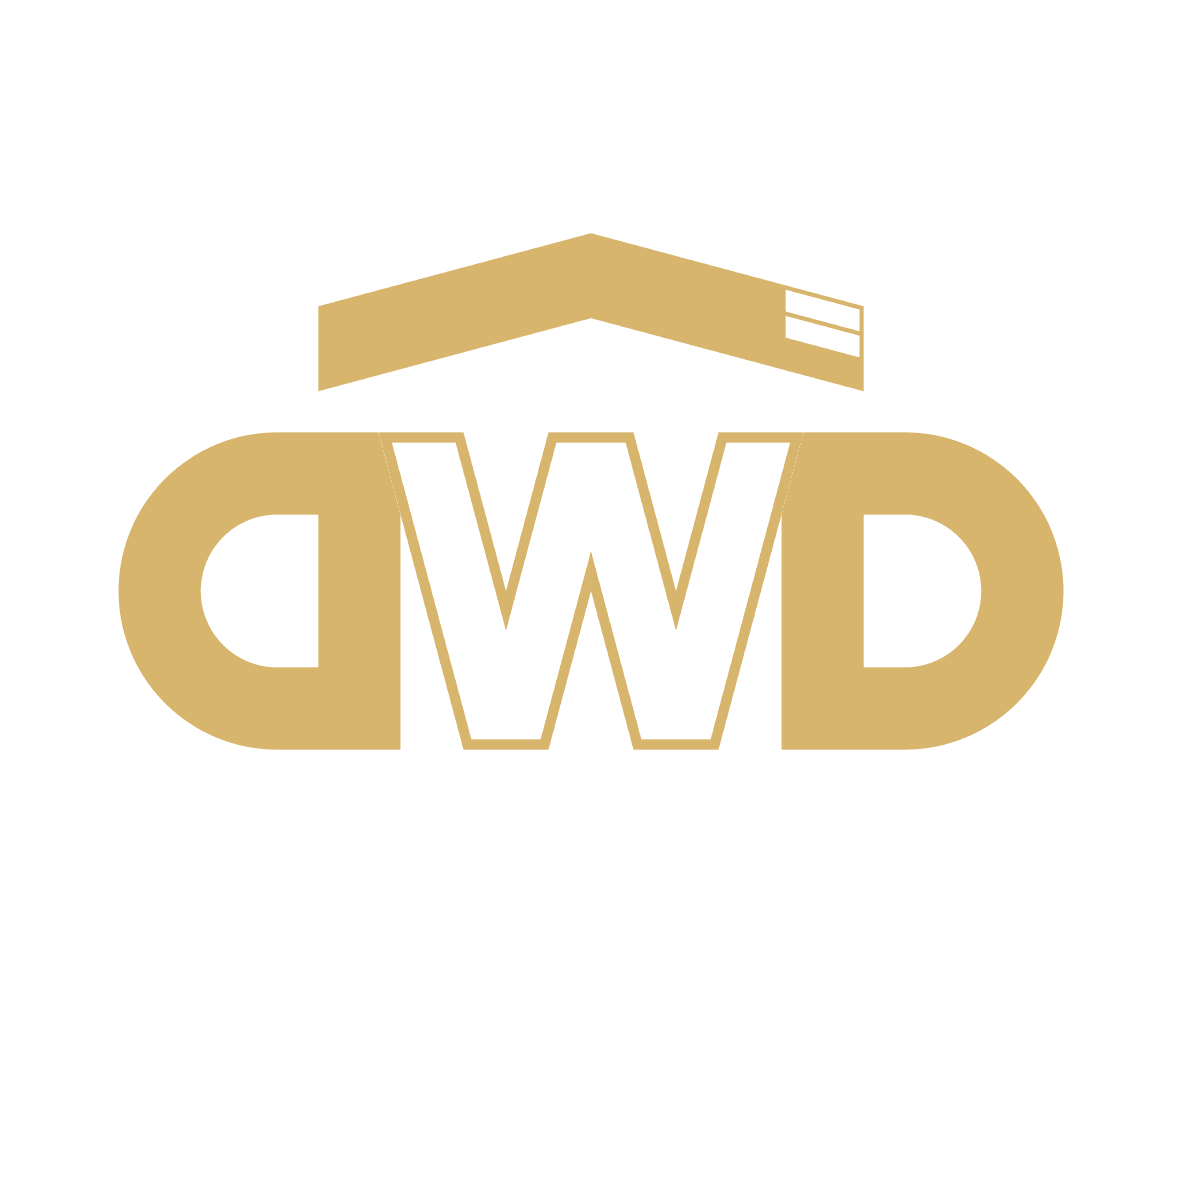 DWD Letter Logo Design on White Background. DWD Creative Initials ...